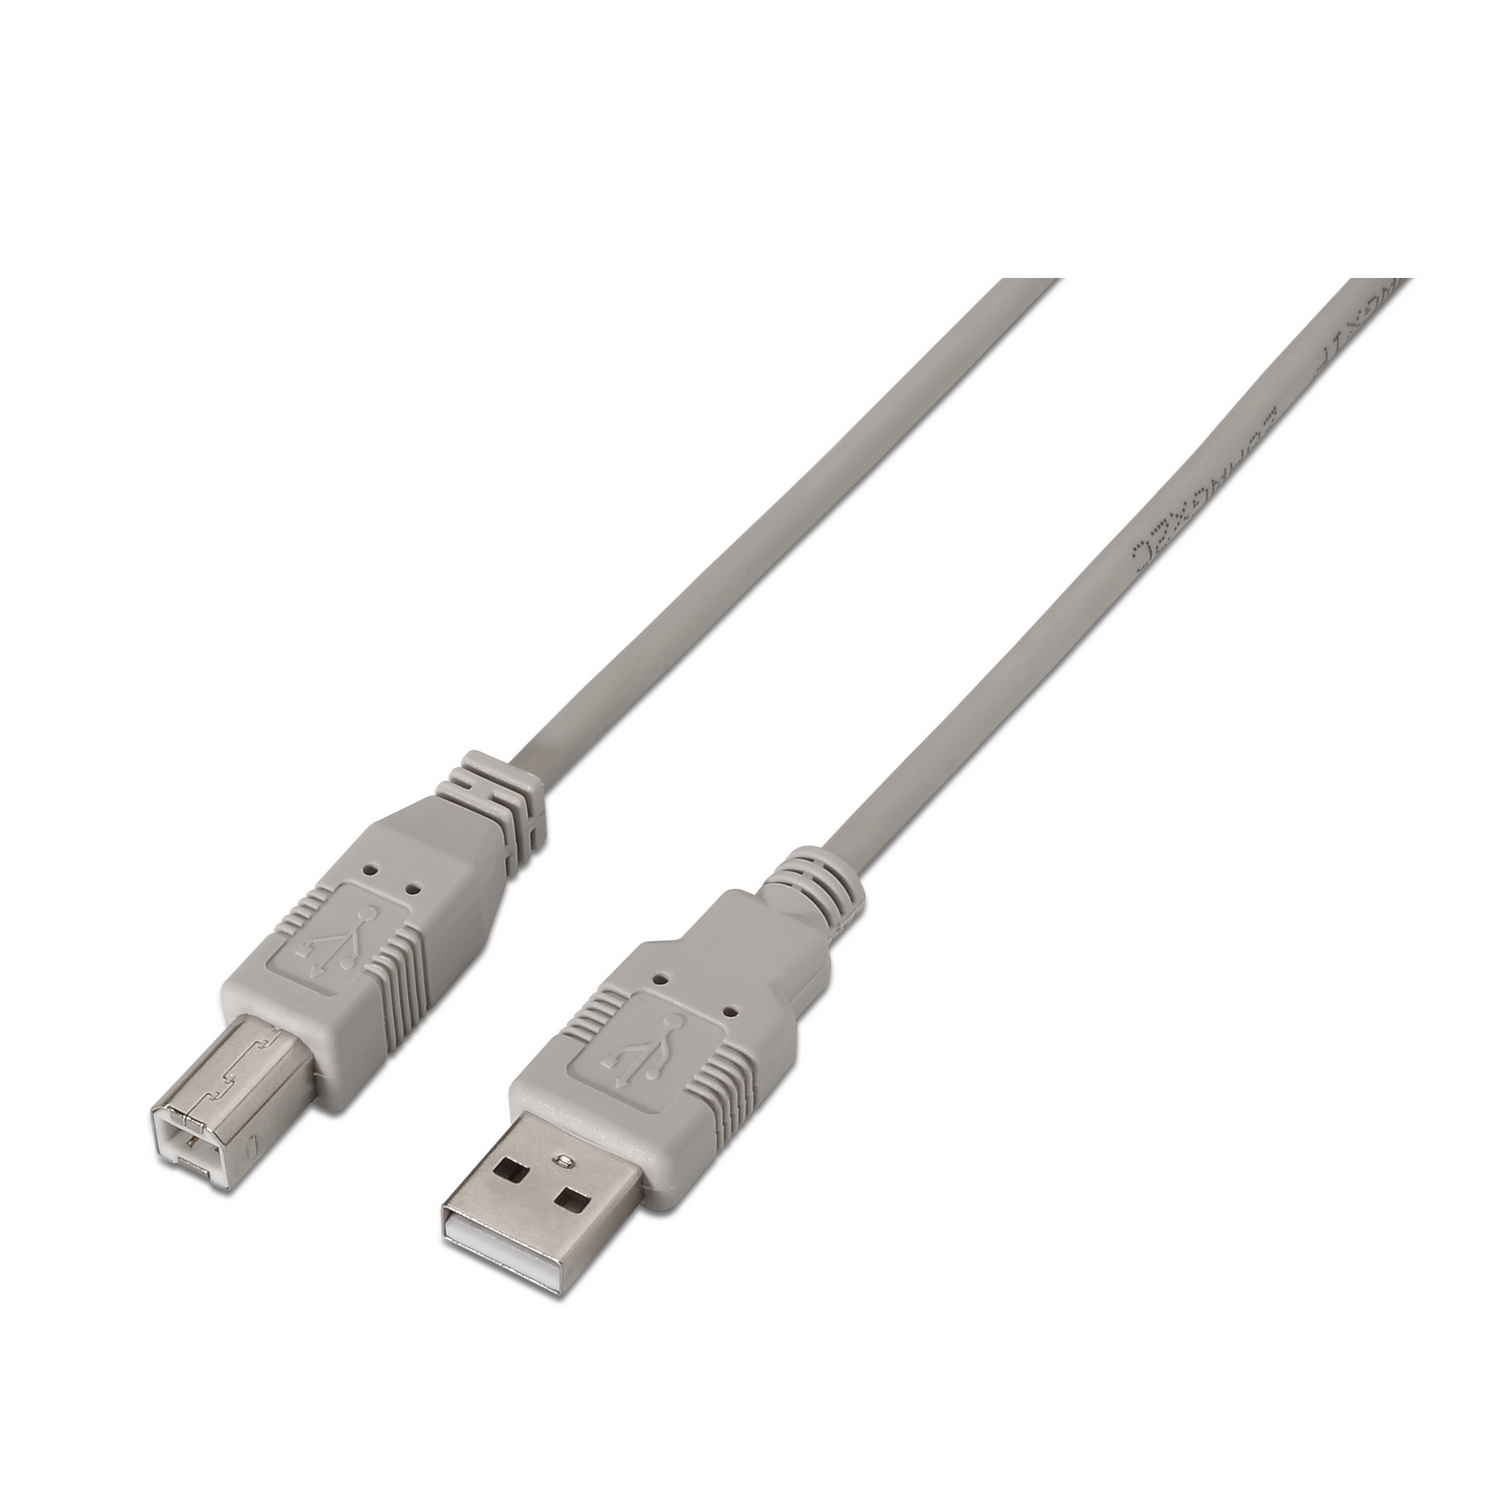 Aisens Cable USB 2.0 Impresora - Tipo A Macho a Tipo B Macho - 3.0m - Color Beige